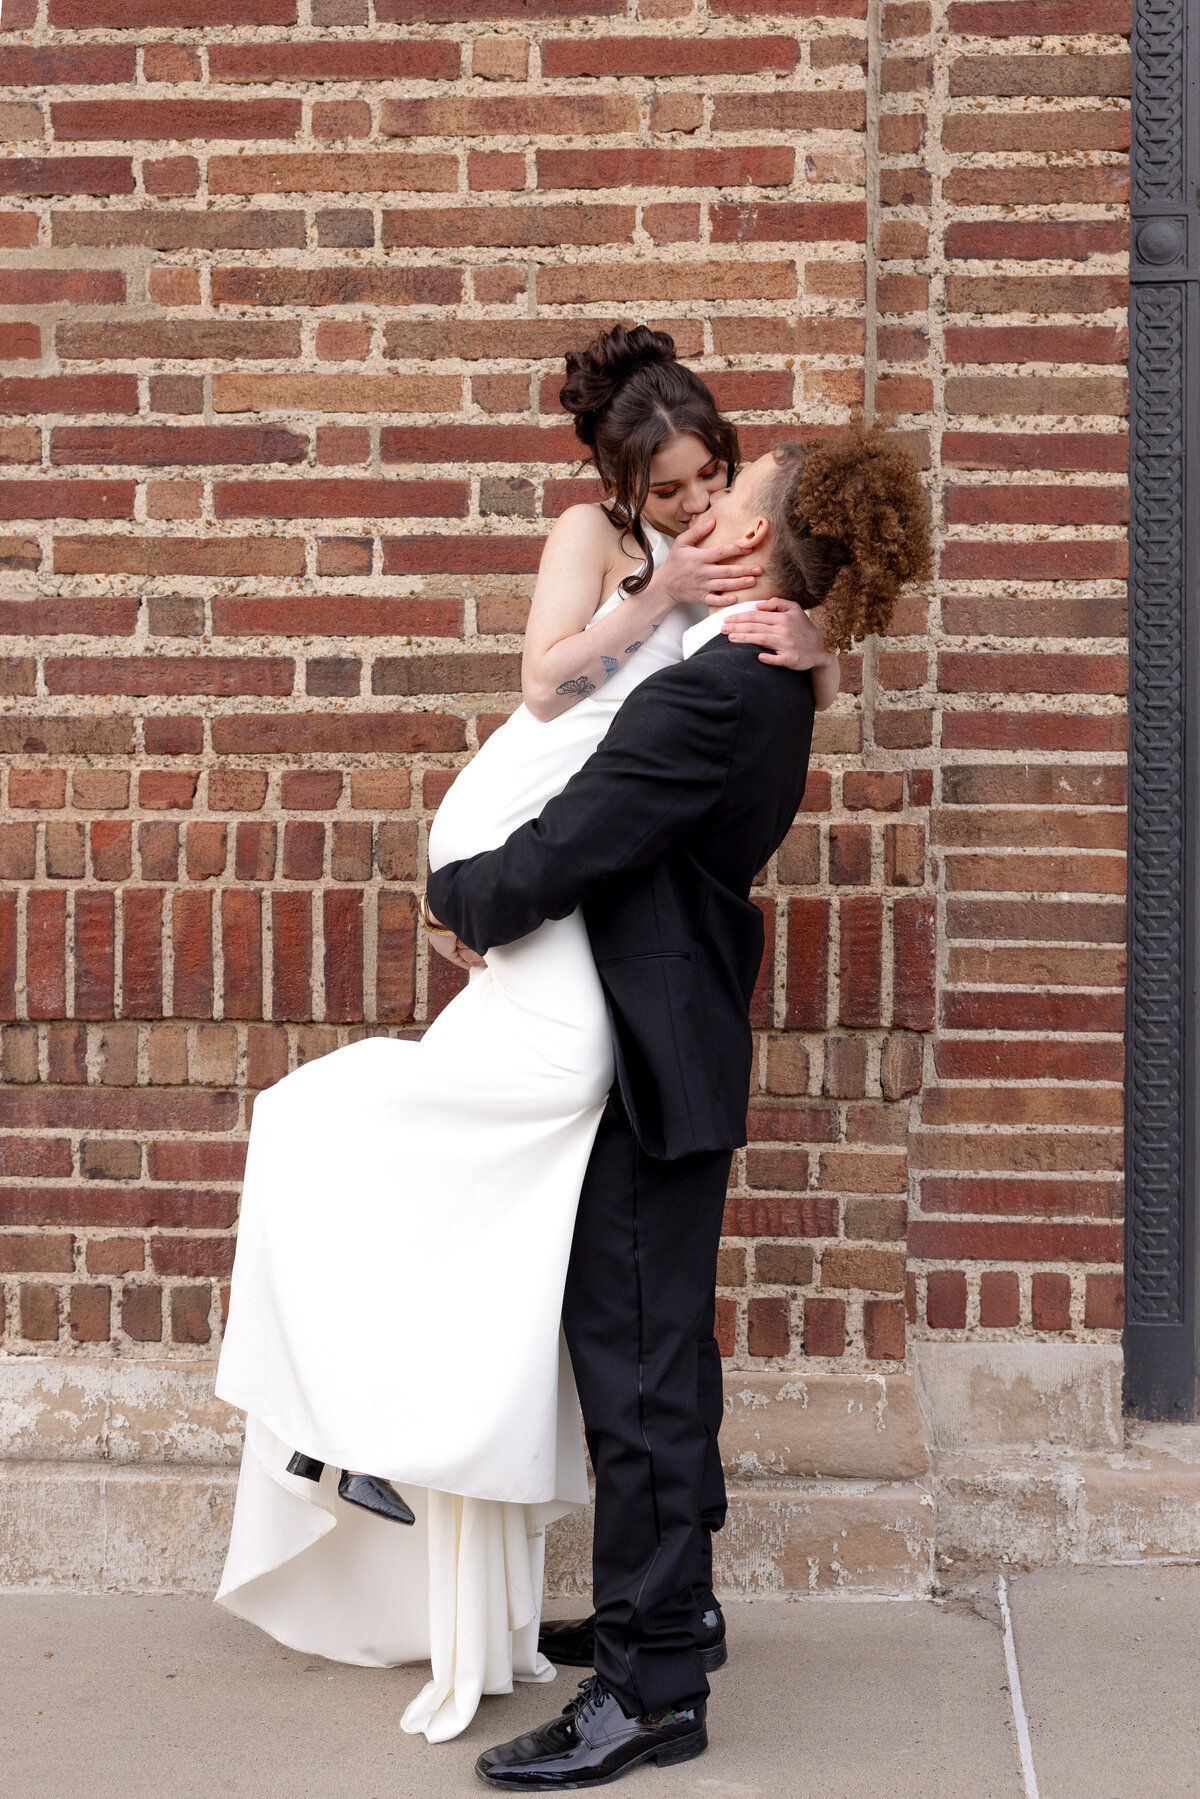 groom lifting bride into a kiss